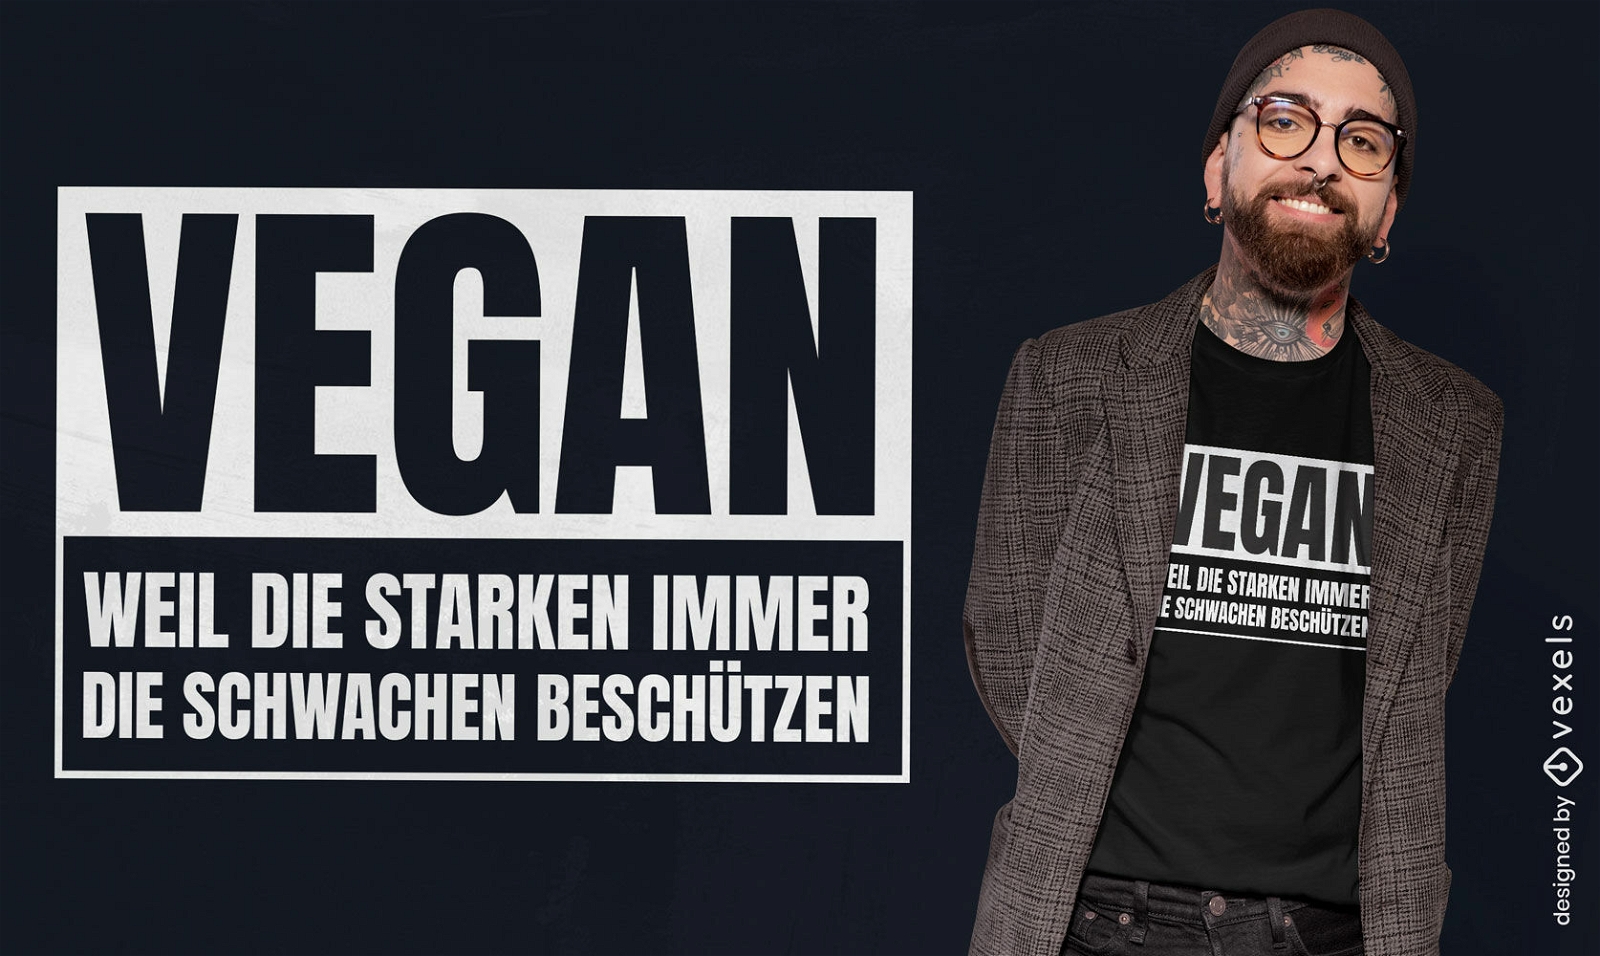 Diseño de camiseta alemana con cita vegana.